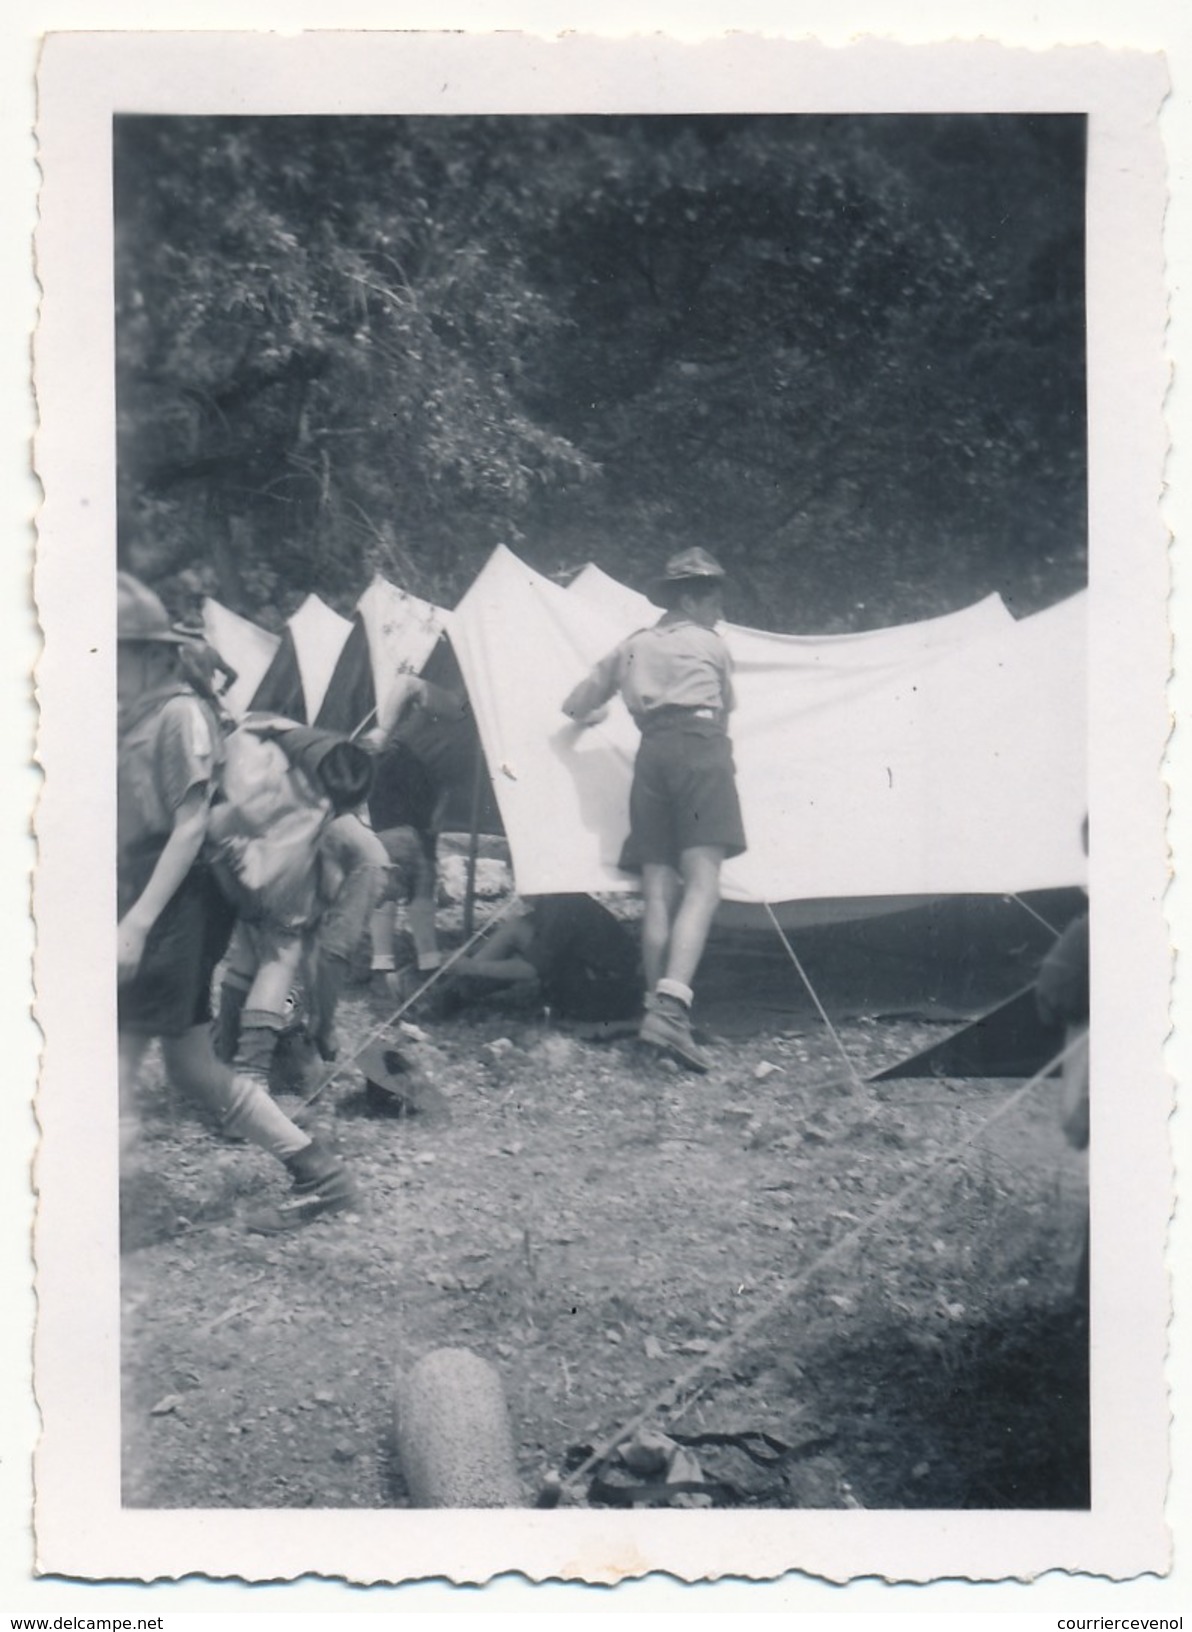 SCOUTISME - Environs MARSEILLE - 20 petites photos Scoutisme entre 1940 et 1942